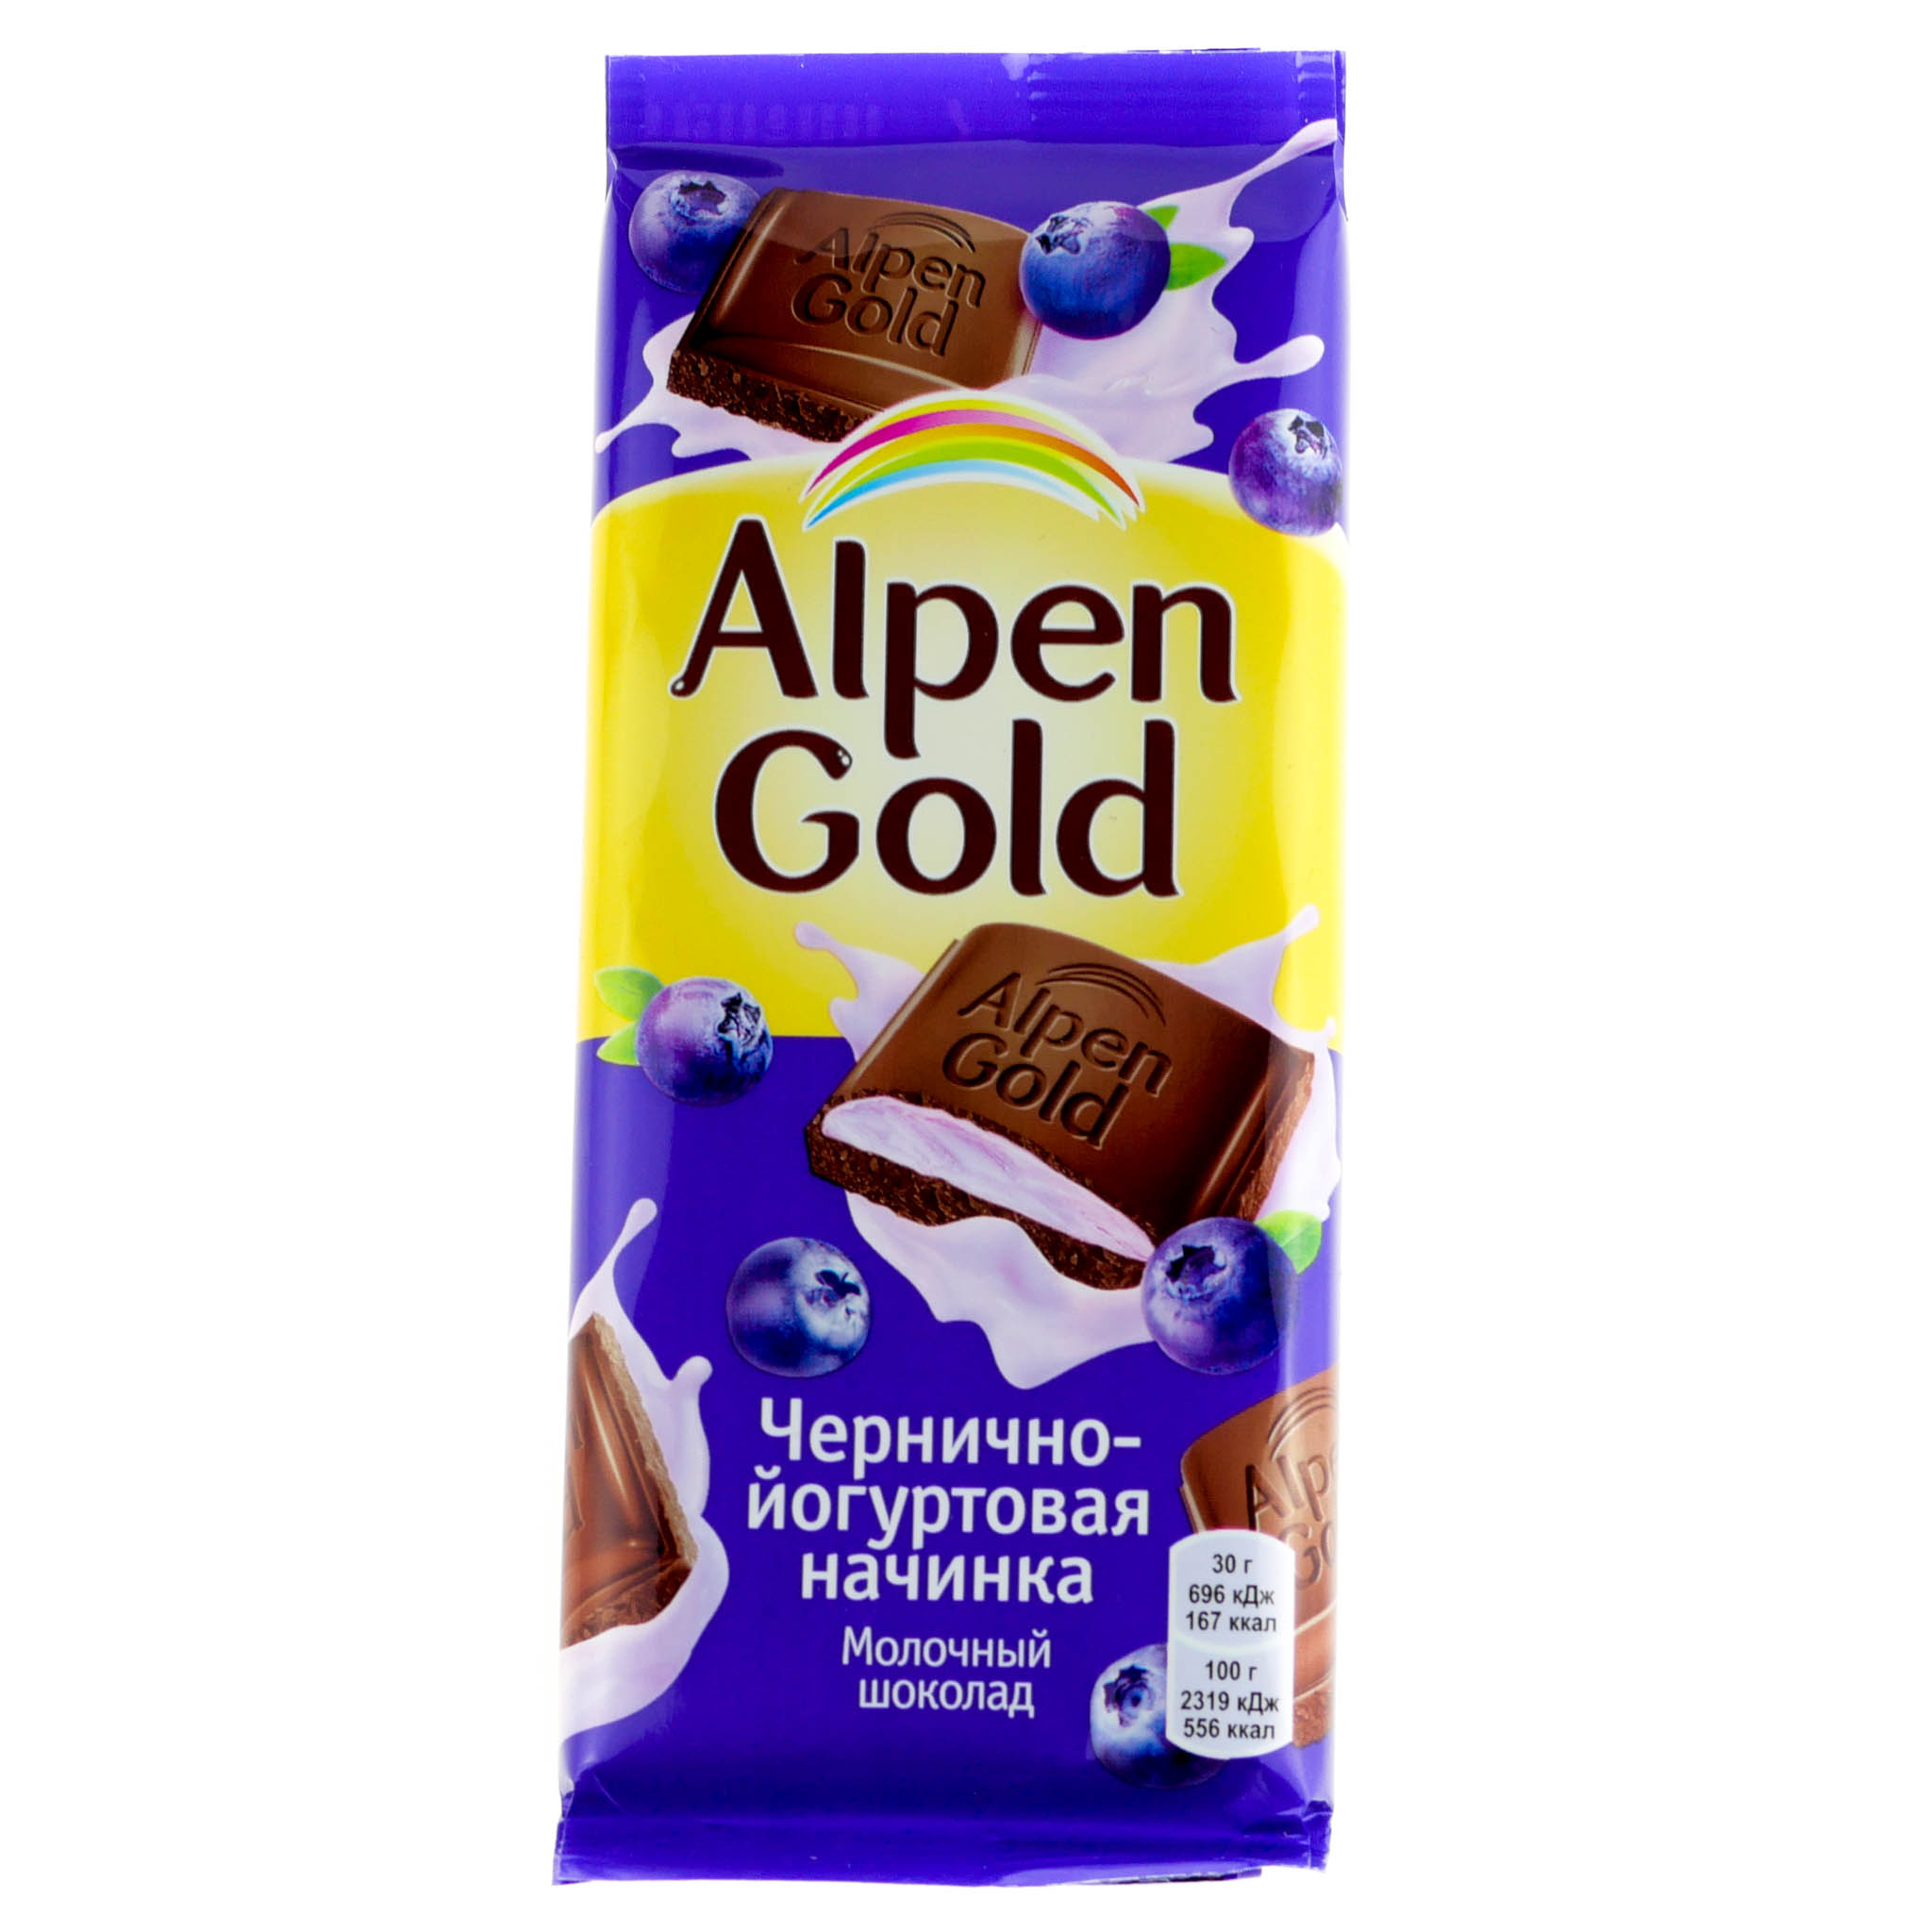 Анпенгольд шоколад. Альпен Голд шоколад черника. Шоколад Alpen Gold 90гр черника с йогуртом. Шоколад Альпен Голд 85г молочный черника/йогурт. Шоколад Альпен Гольд молочный 85-90г.